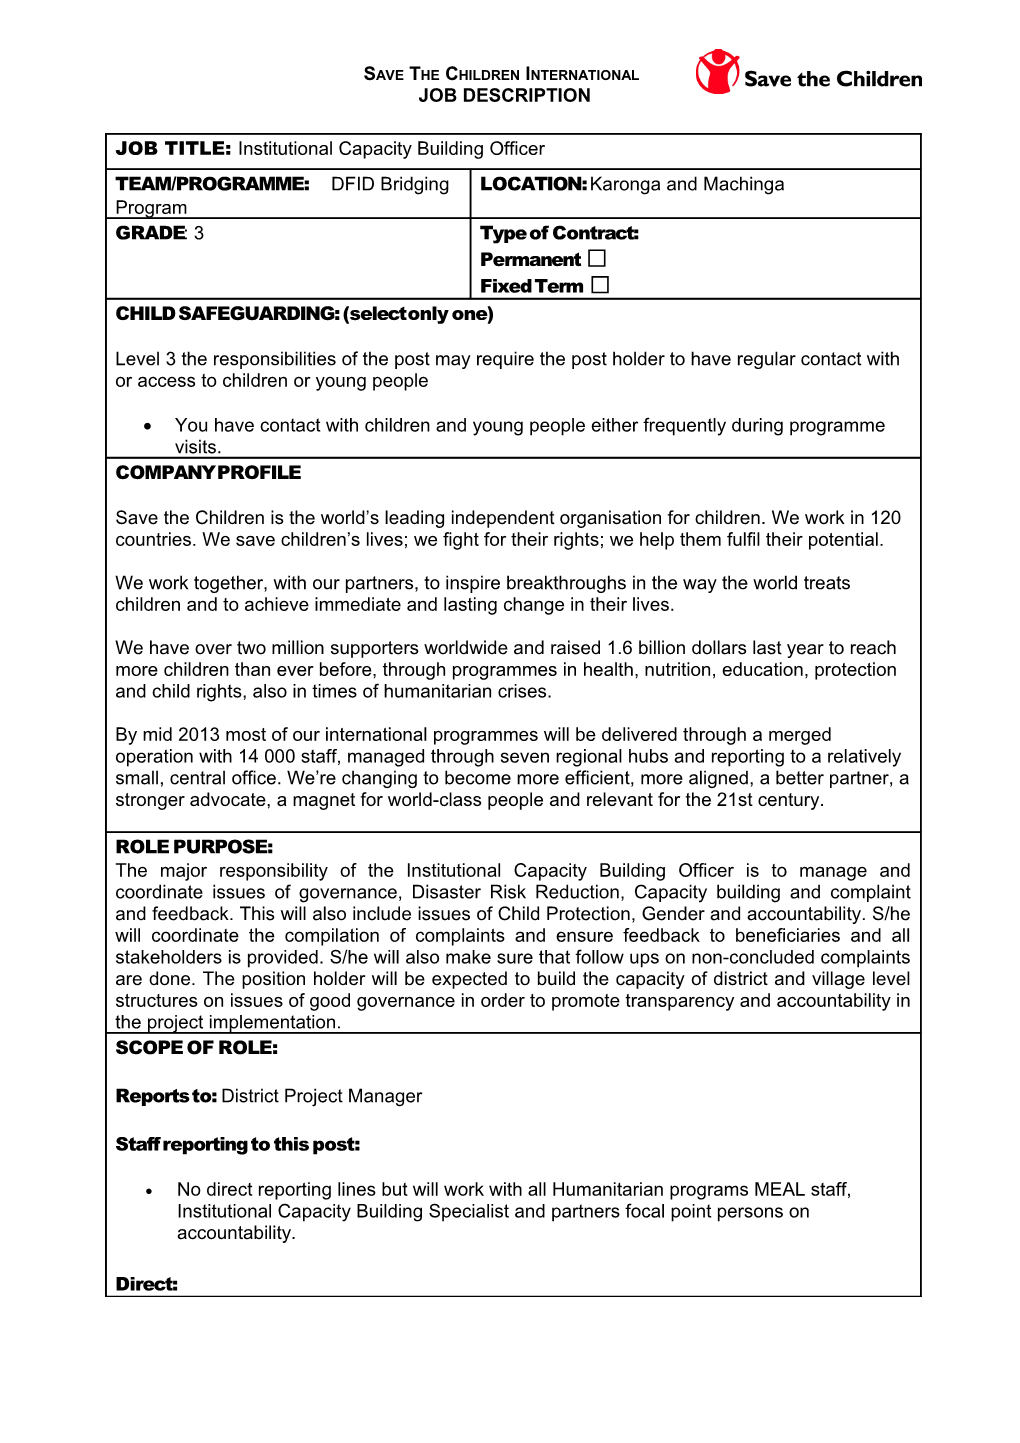 SCI Job Description Template - July 2012